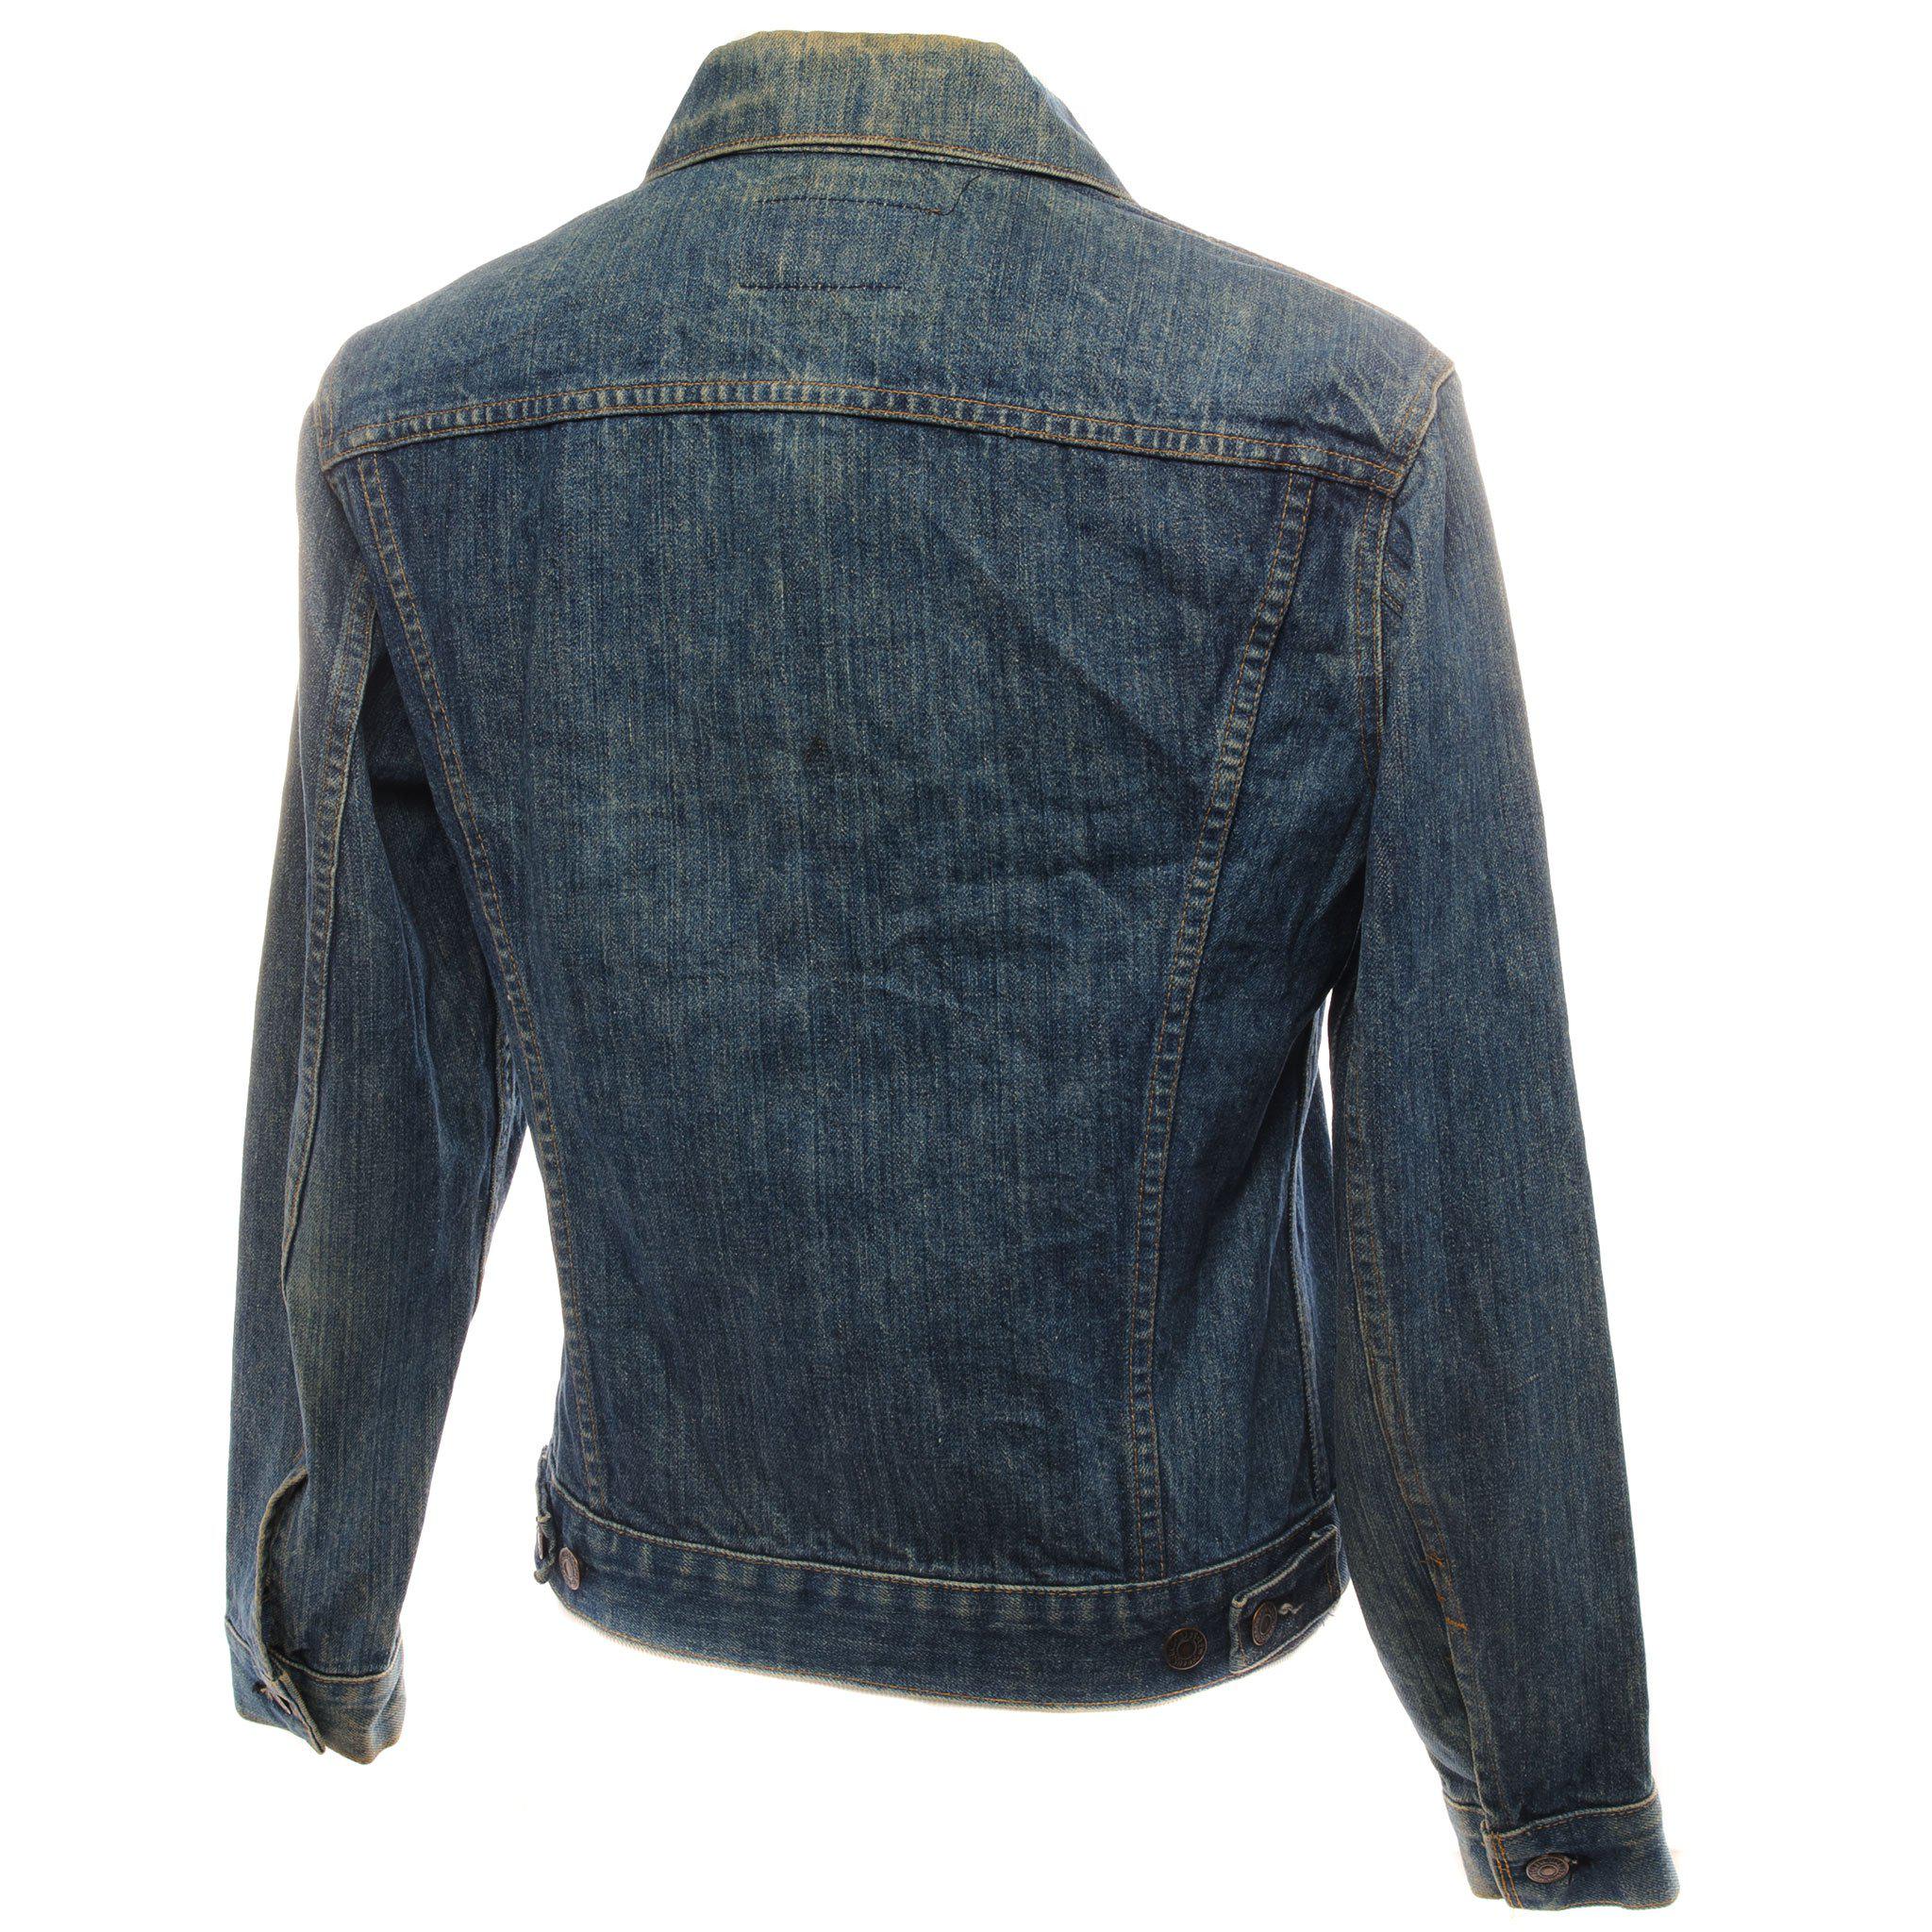 Vintage Levis Jacket Single Stitch Size 38 Made in USA